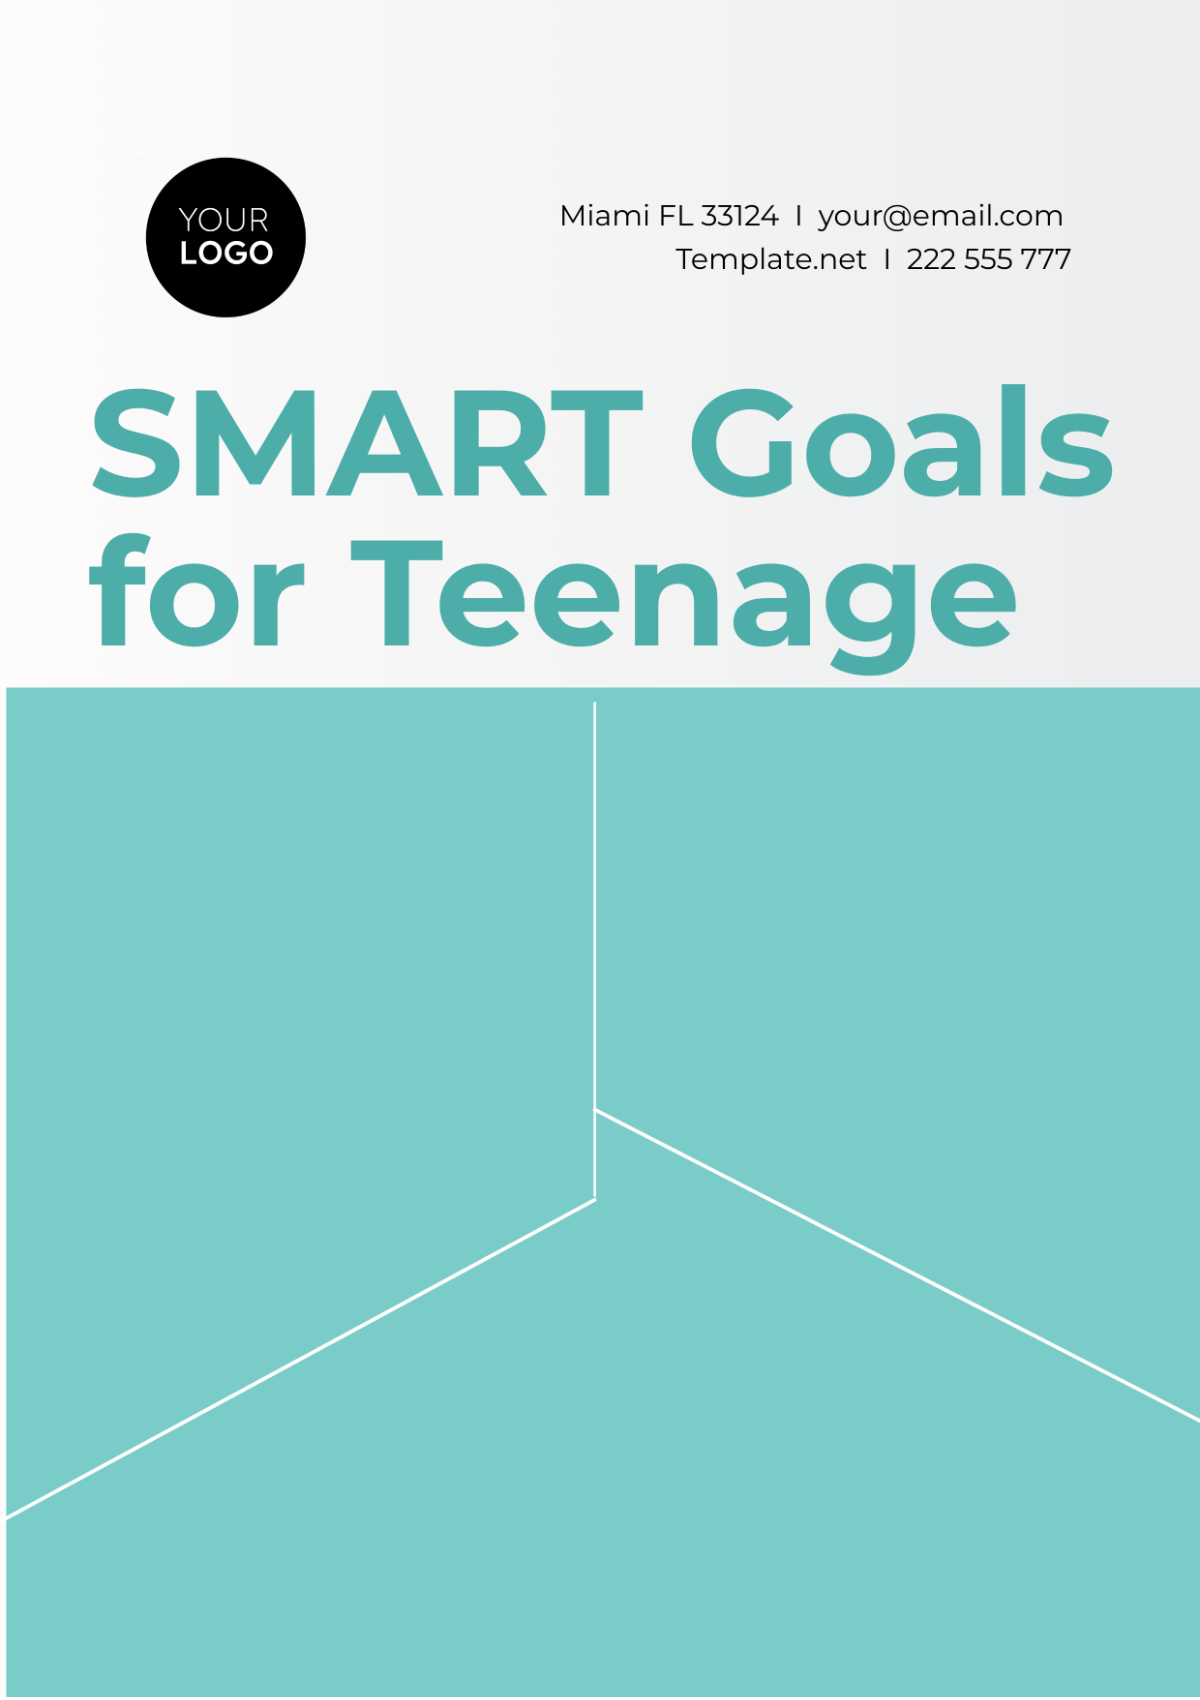 SMART Goals for Teenage Template